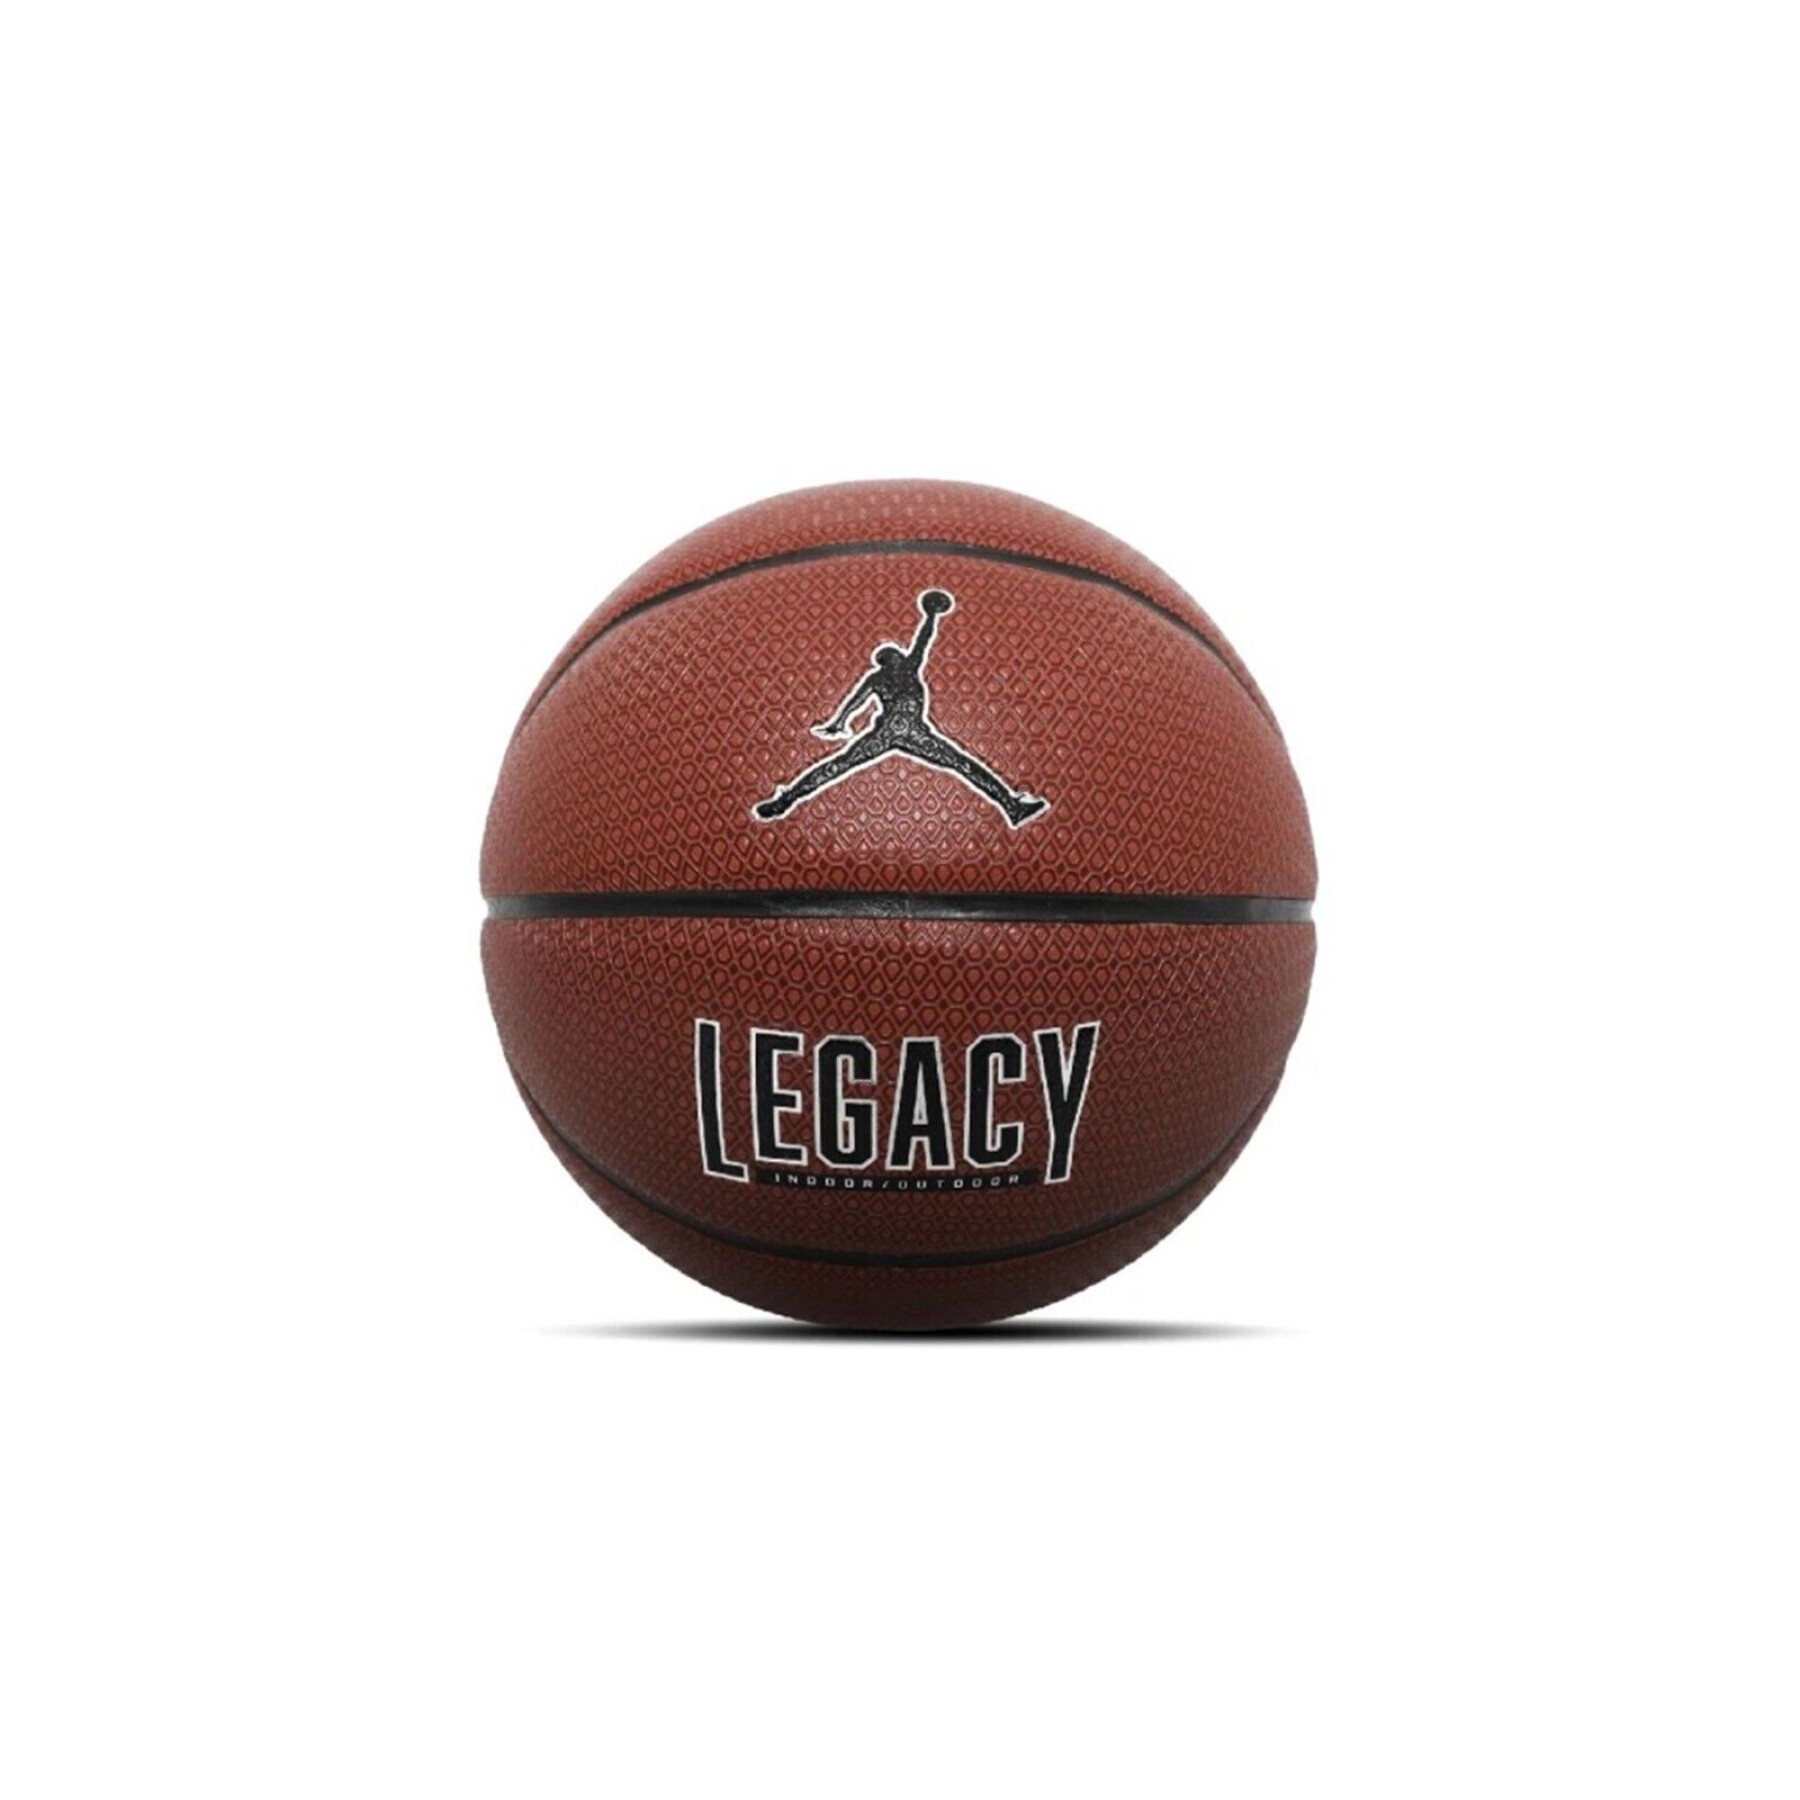 Ballon Jordan Legacy 2.0 8P Deflated